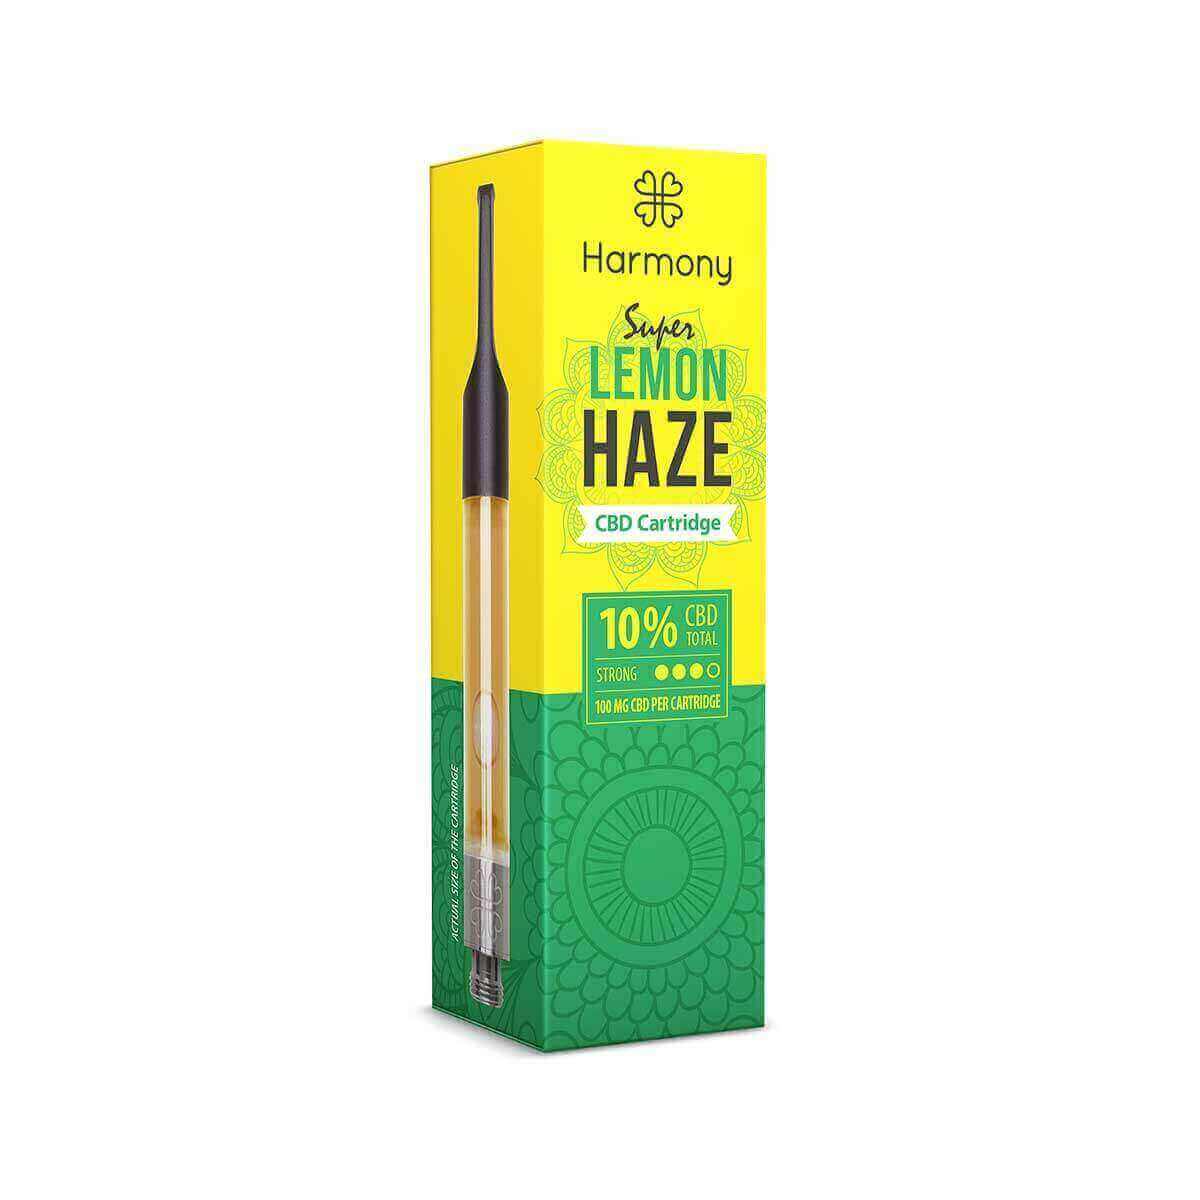 Harmony-CBD-E-liquids-super-Yellow-Haze-Super-lemon-Haze-Lemonhaze-10-Kartusche-100mg-CBD-1ml-cartridge